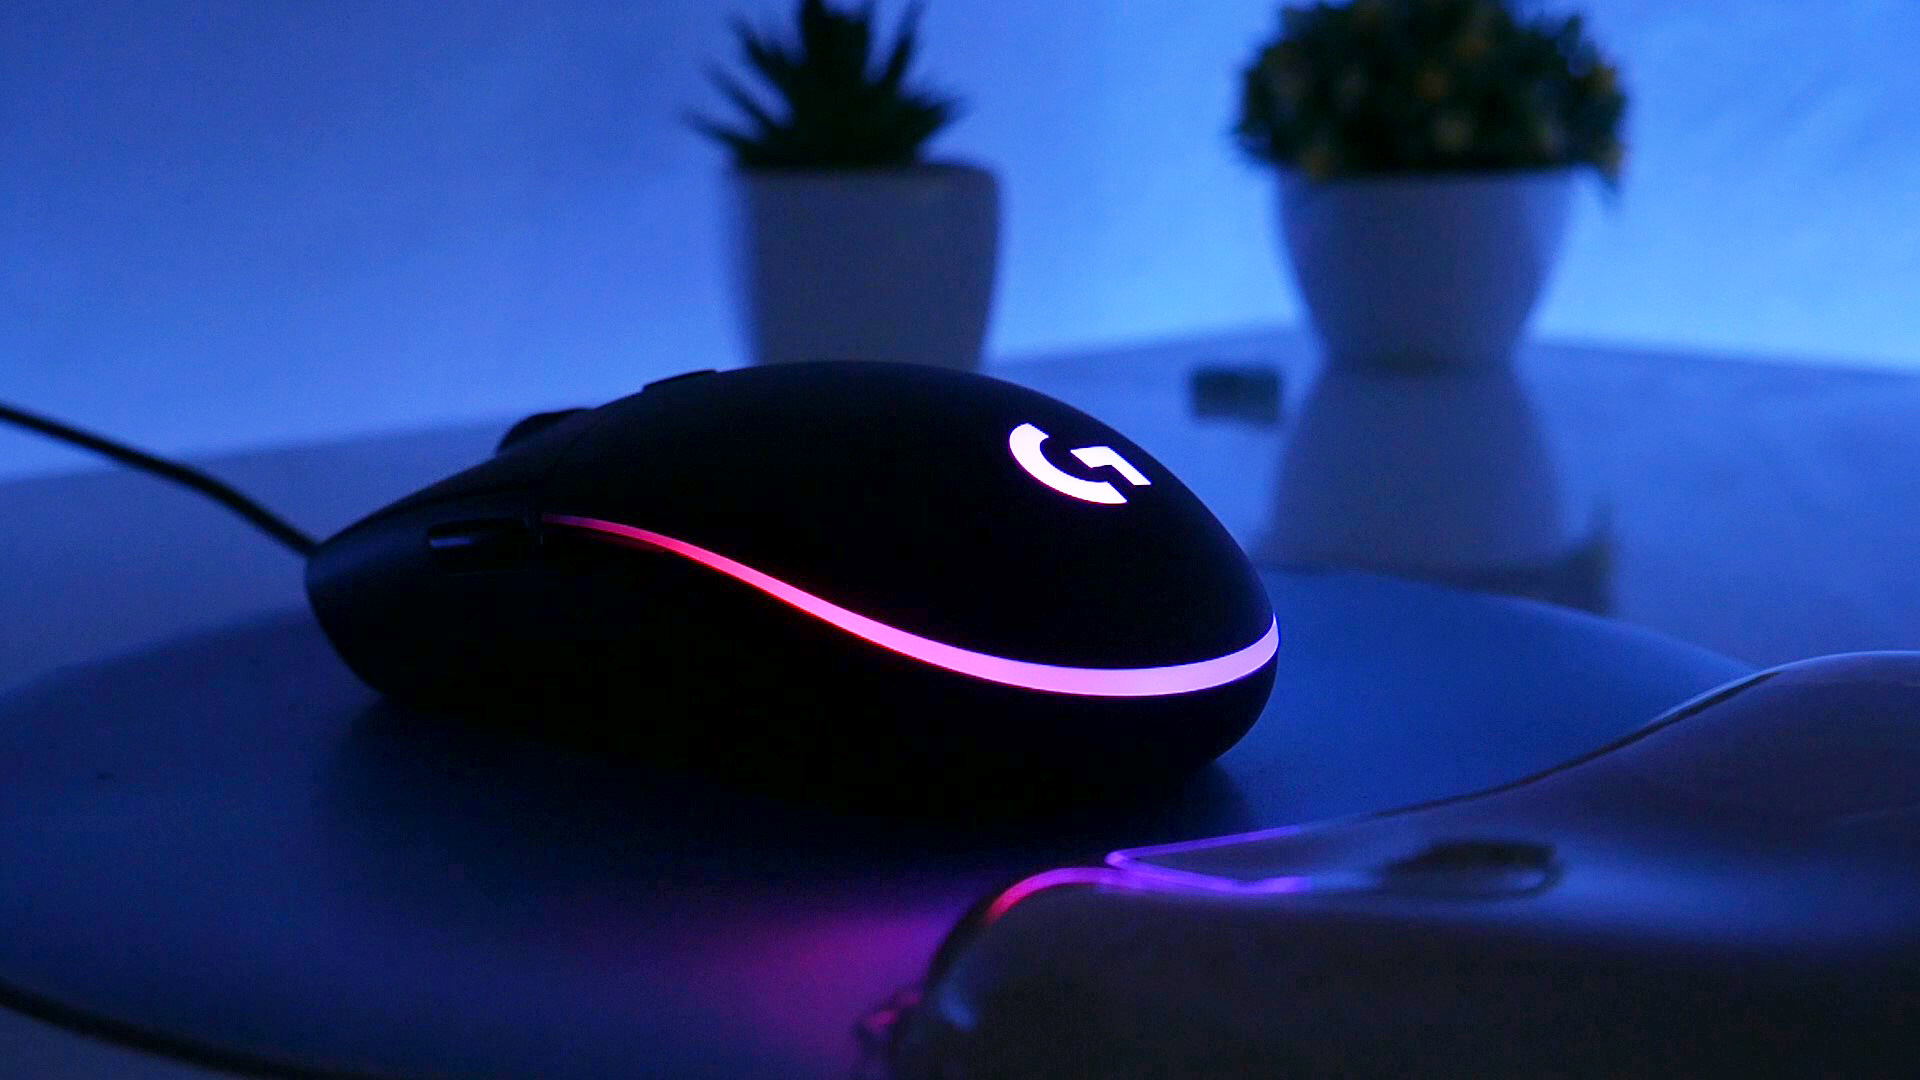 Logitech G203 Lightsync: mouse gamer, barato y de calidad